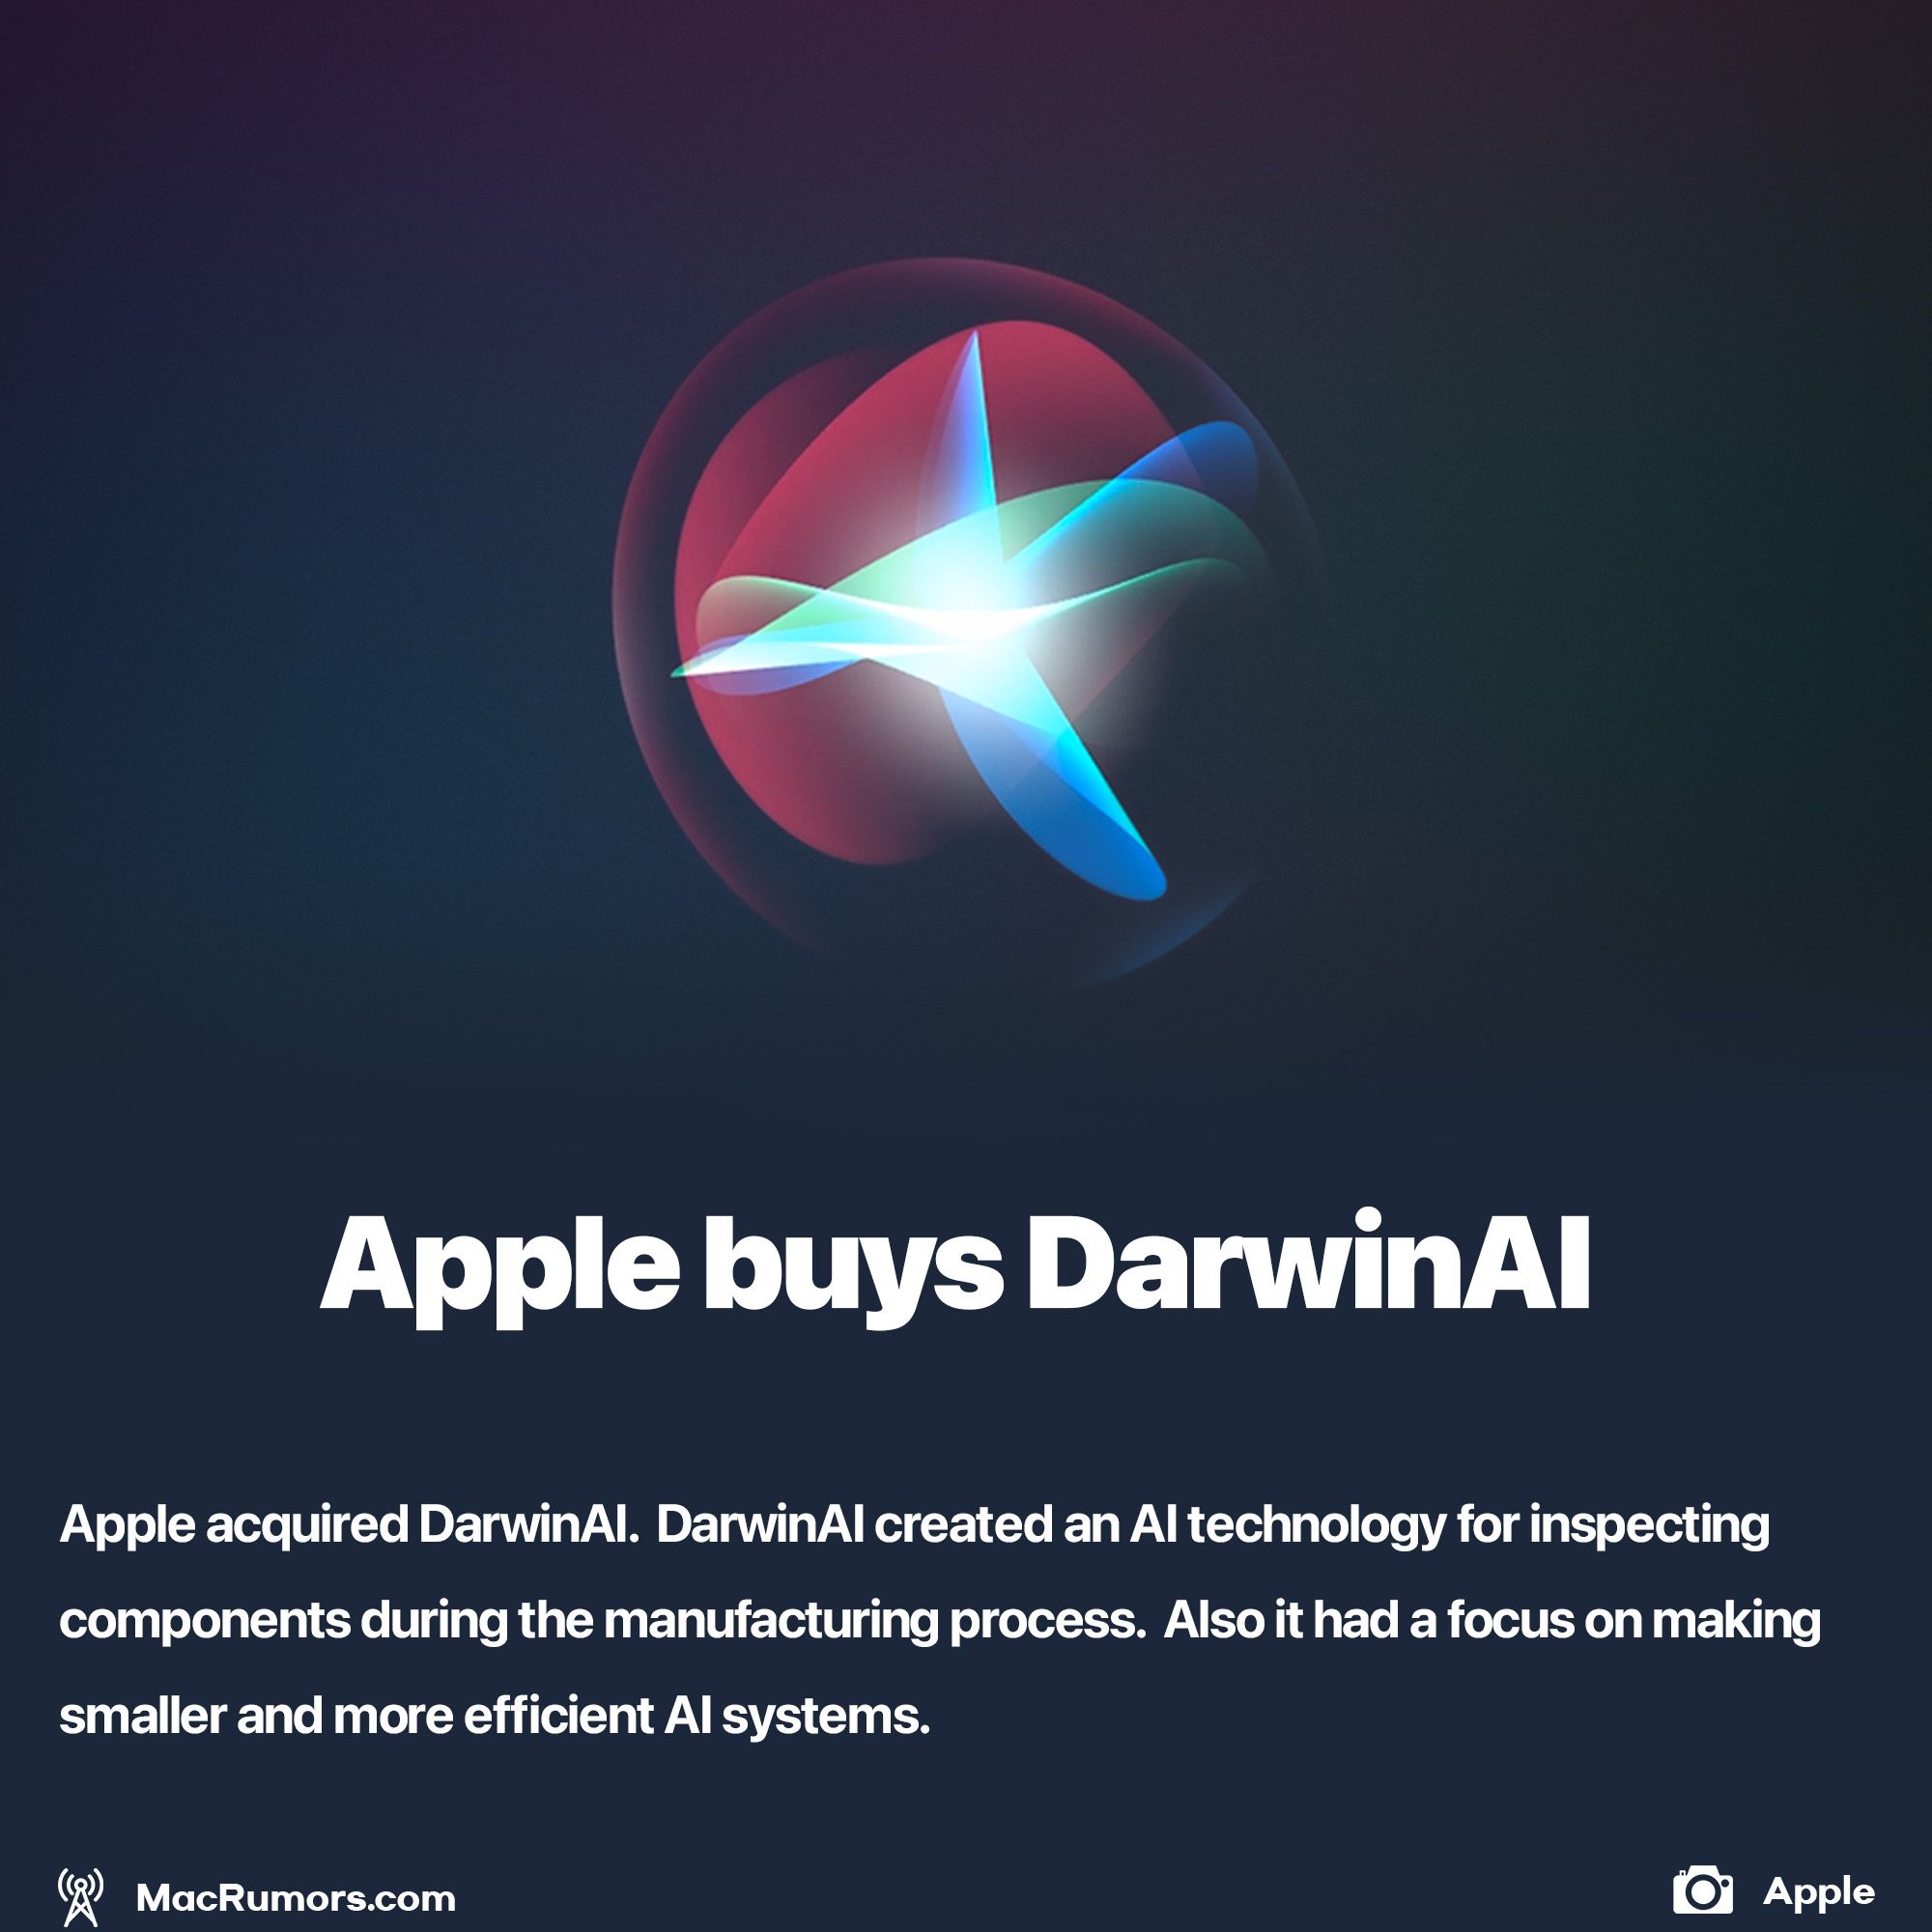 Apple bought DarwinAI